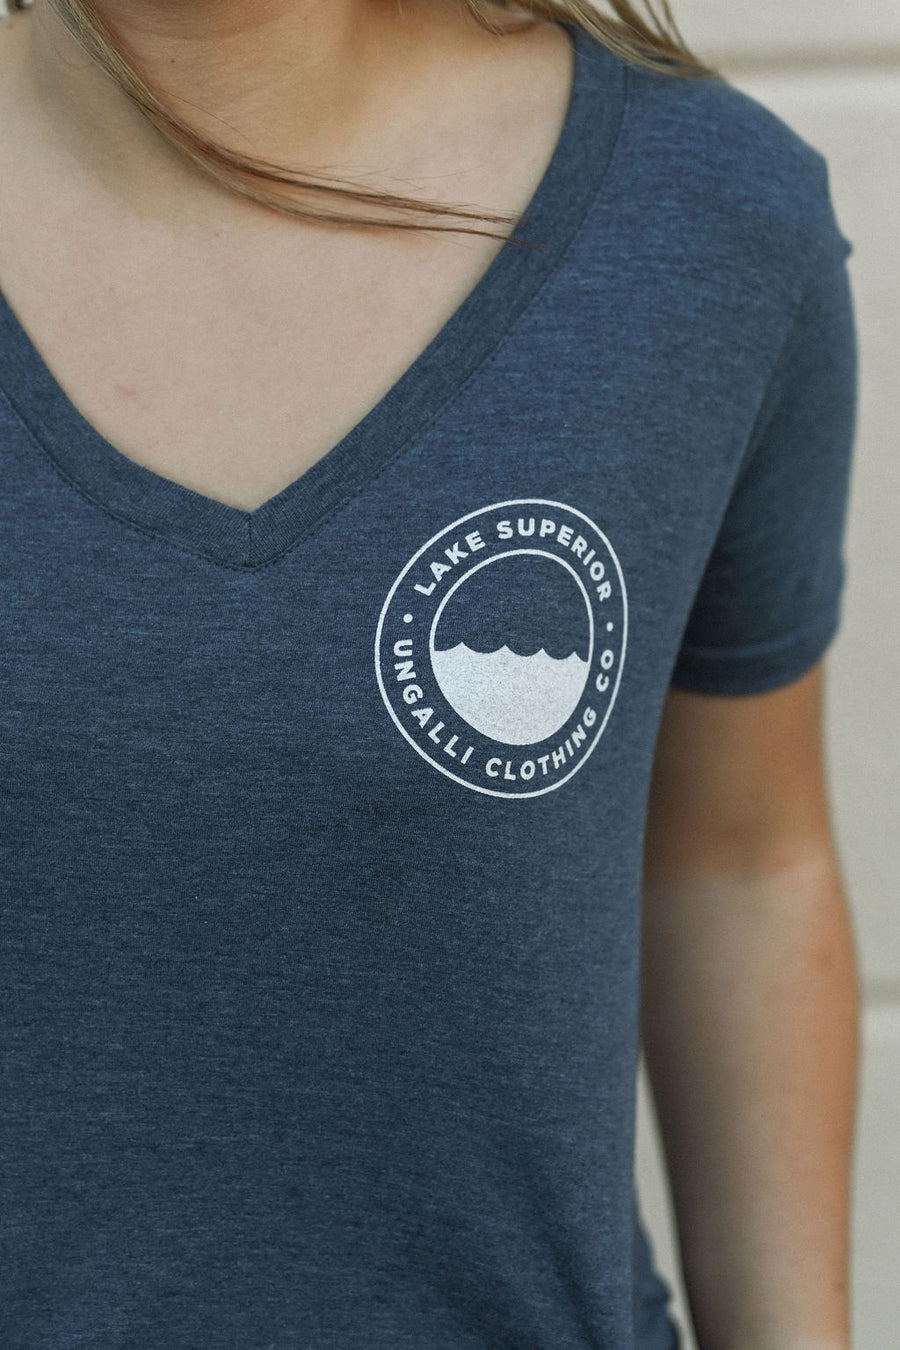 Women's blue recycled v neck t-shirt with white Lake Superior logo